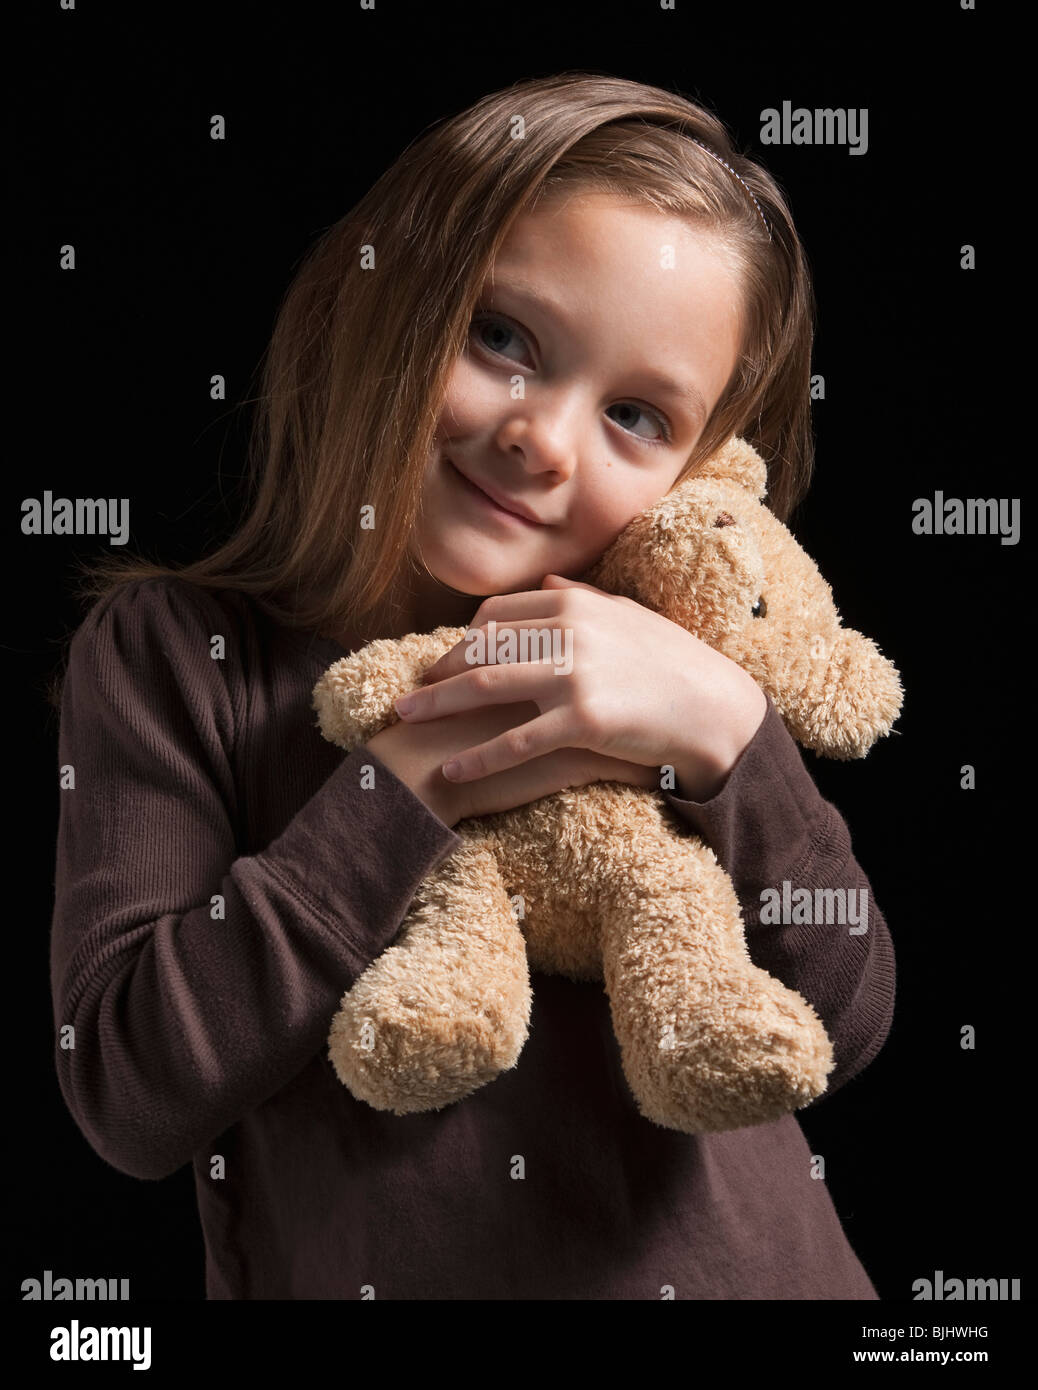 Young girl hugging teddy bear Stock Photo